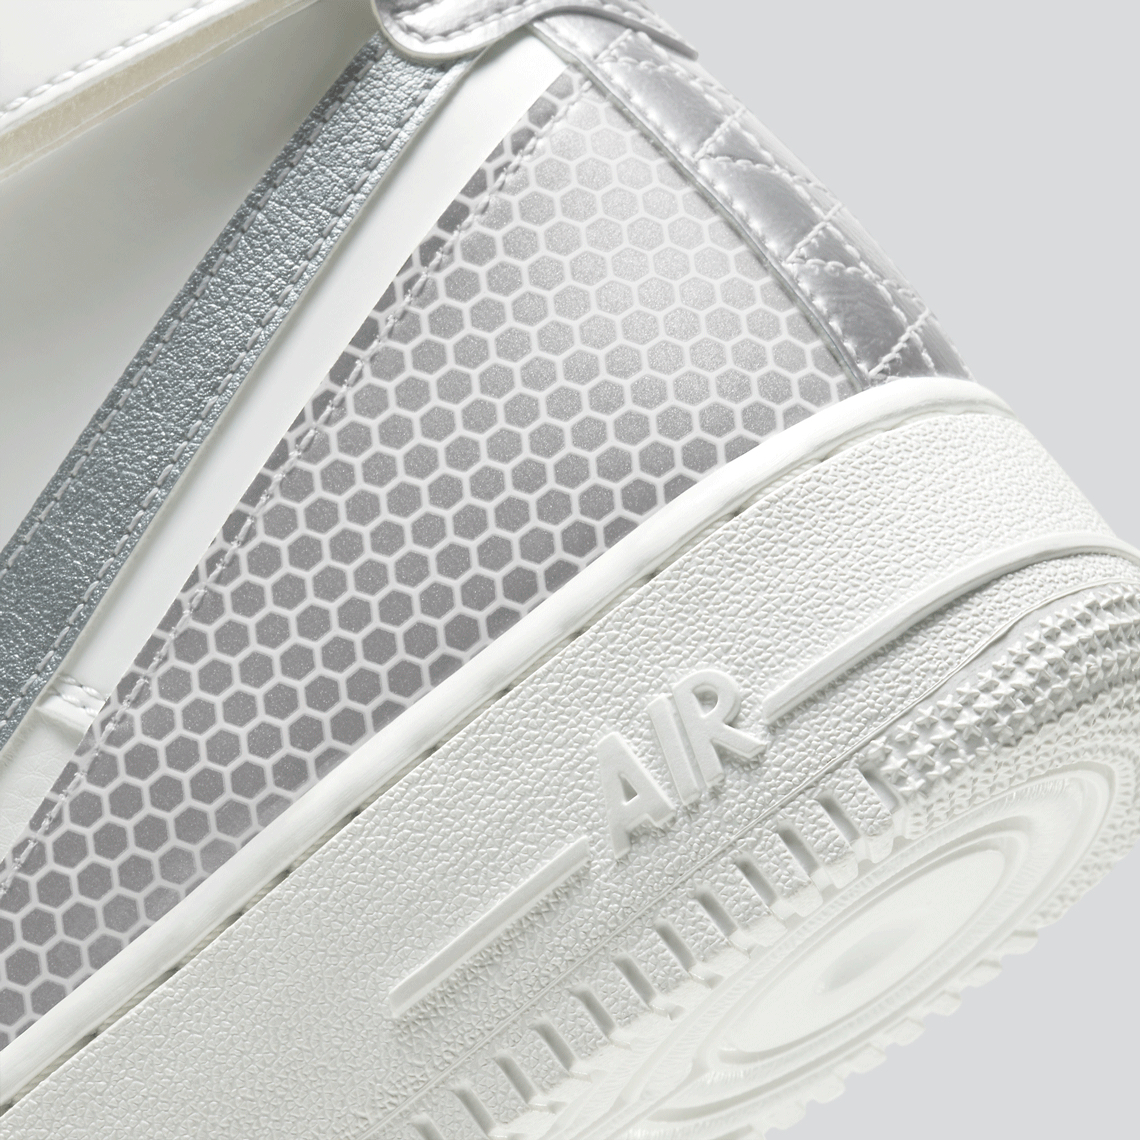 3M Nike Air Force 1 High White Silver CU4159-100 | SneakerNews.com